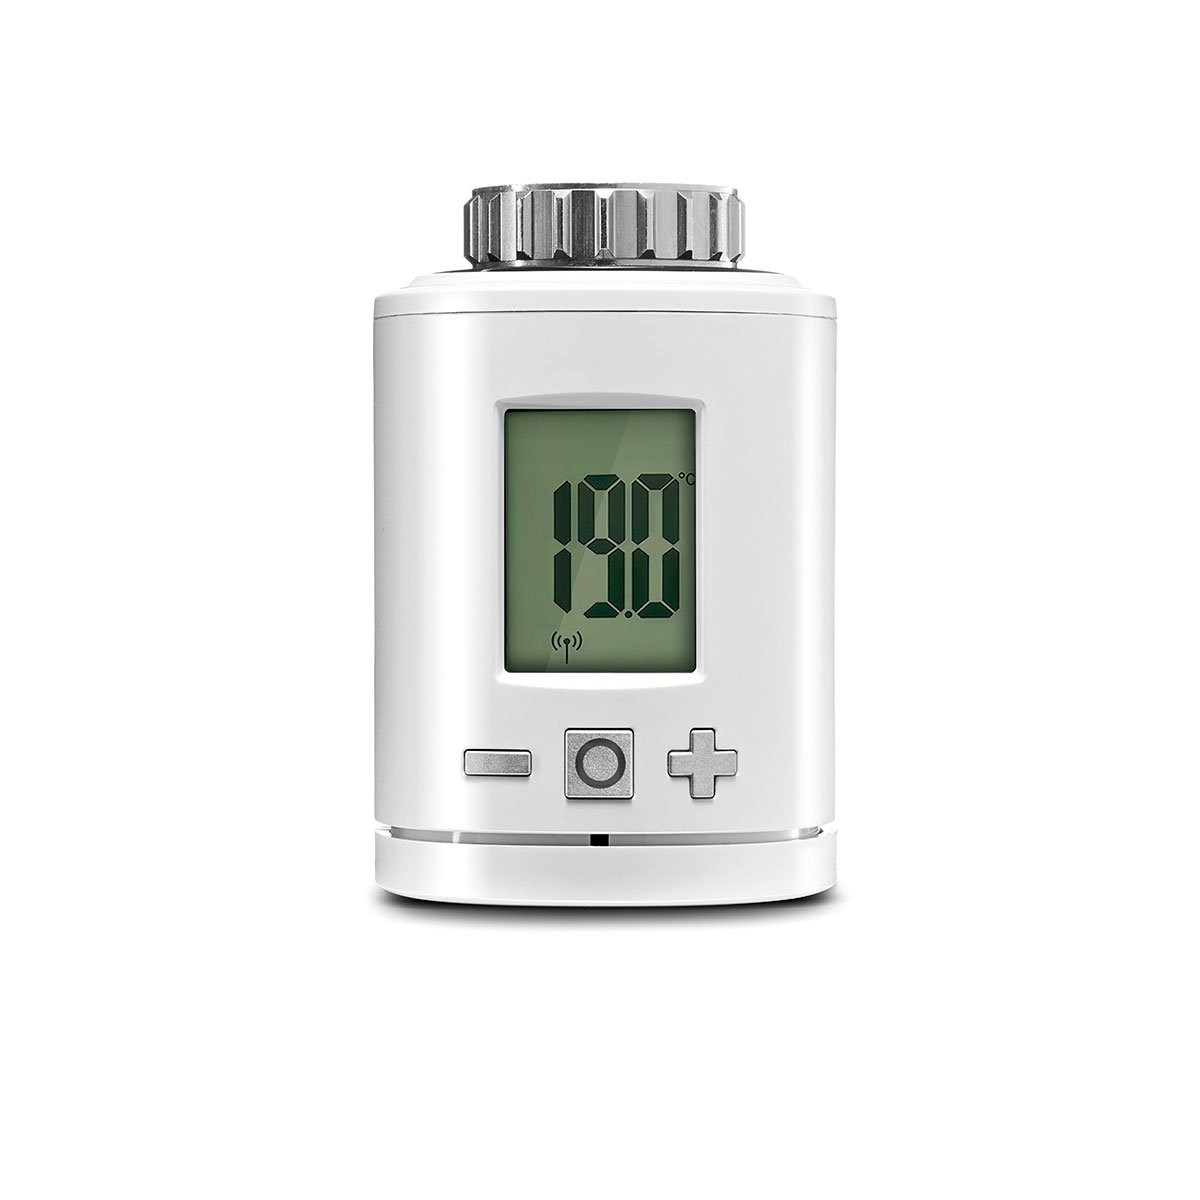 Gigaset Thermostat ONE X (pak van 3)